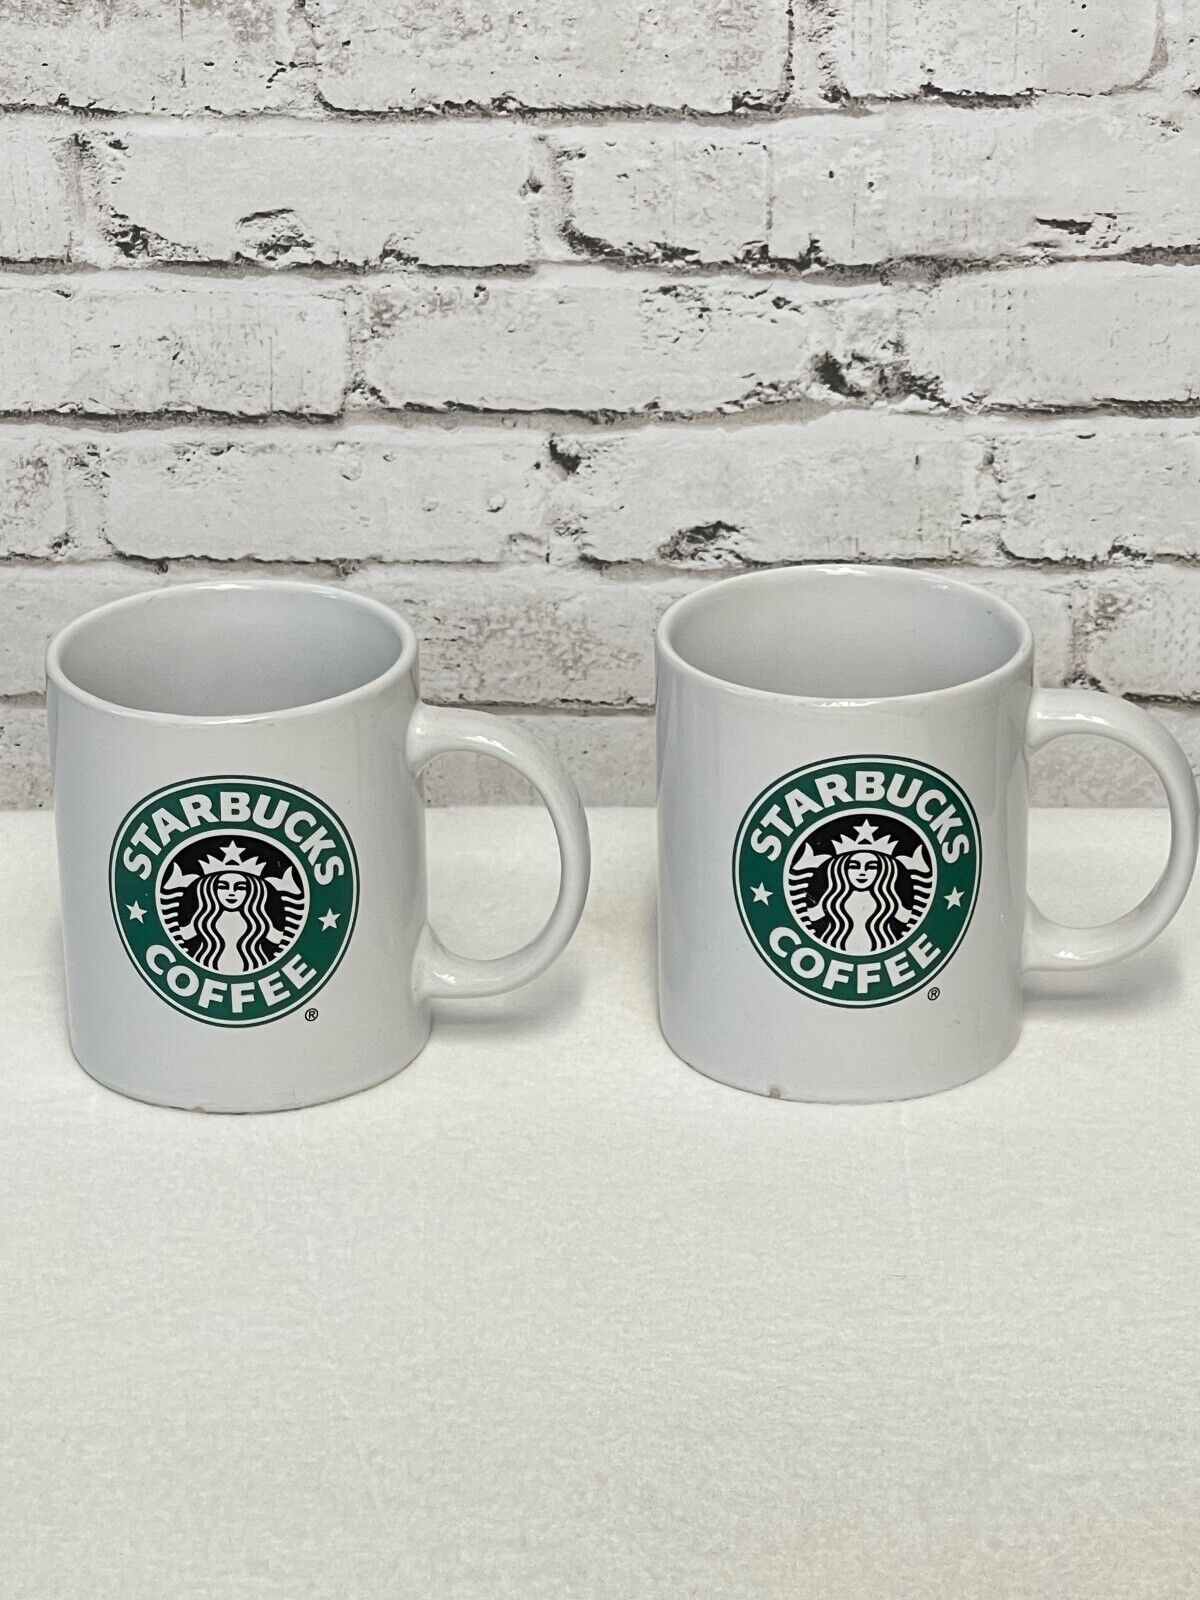 Starbucks Coffee Company 2008 Pair of Mugs Coffee Cups White Black Green Logo